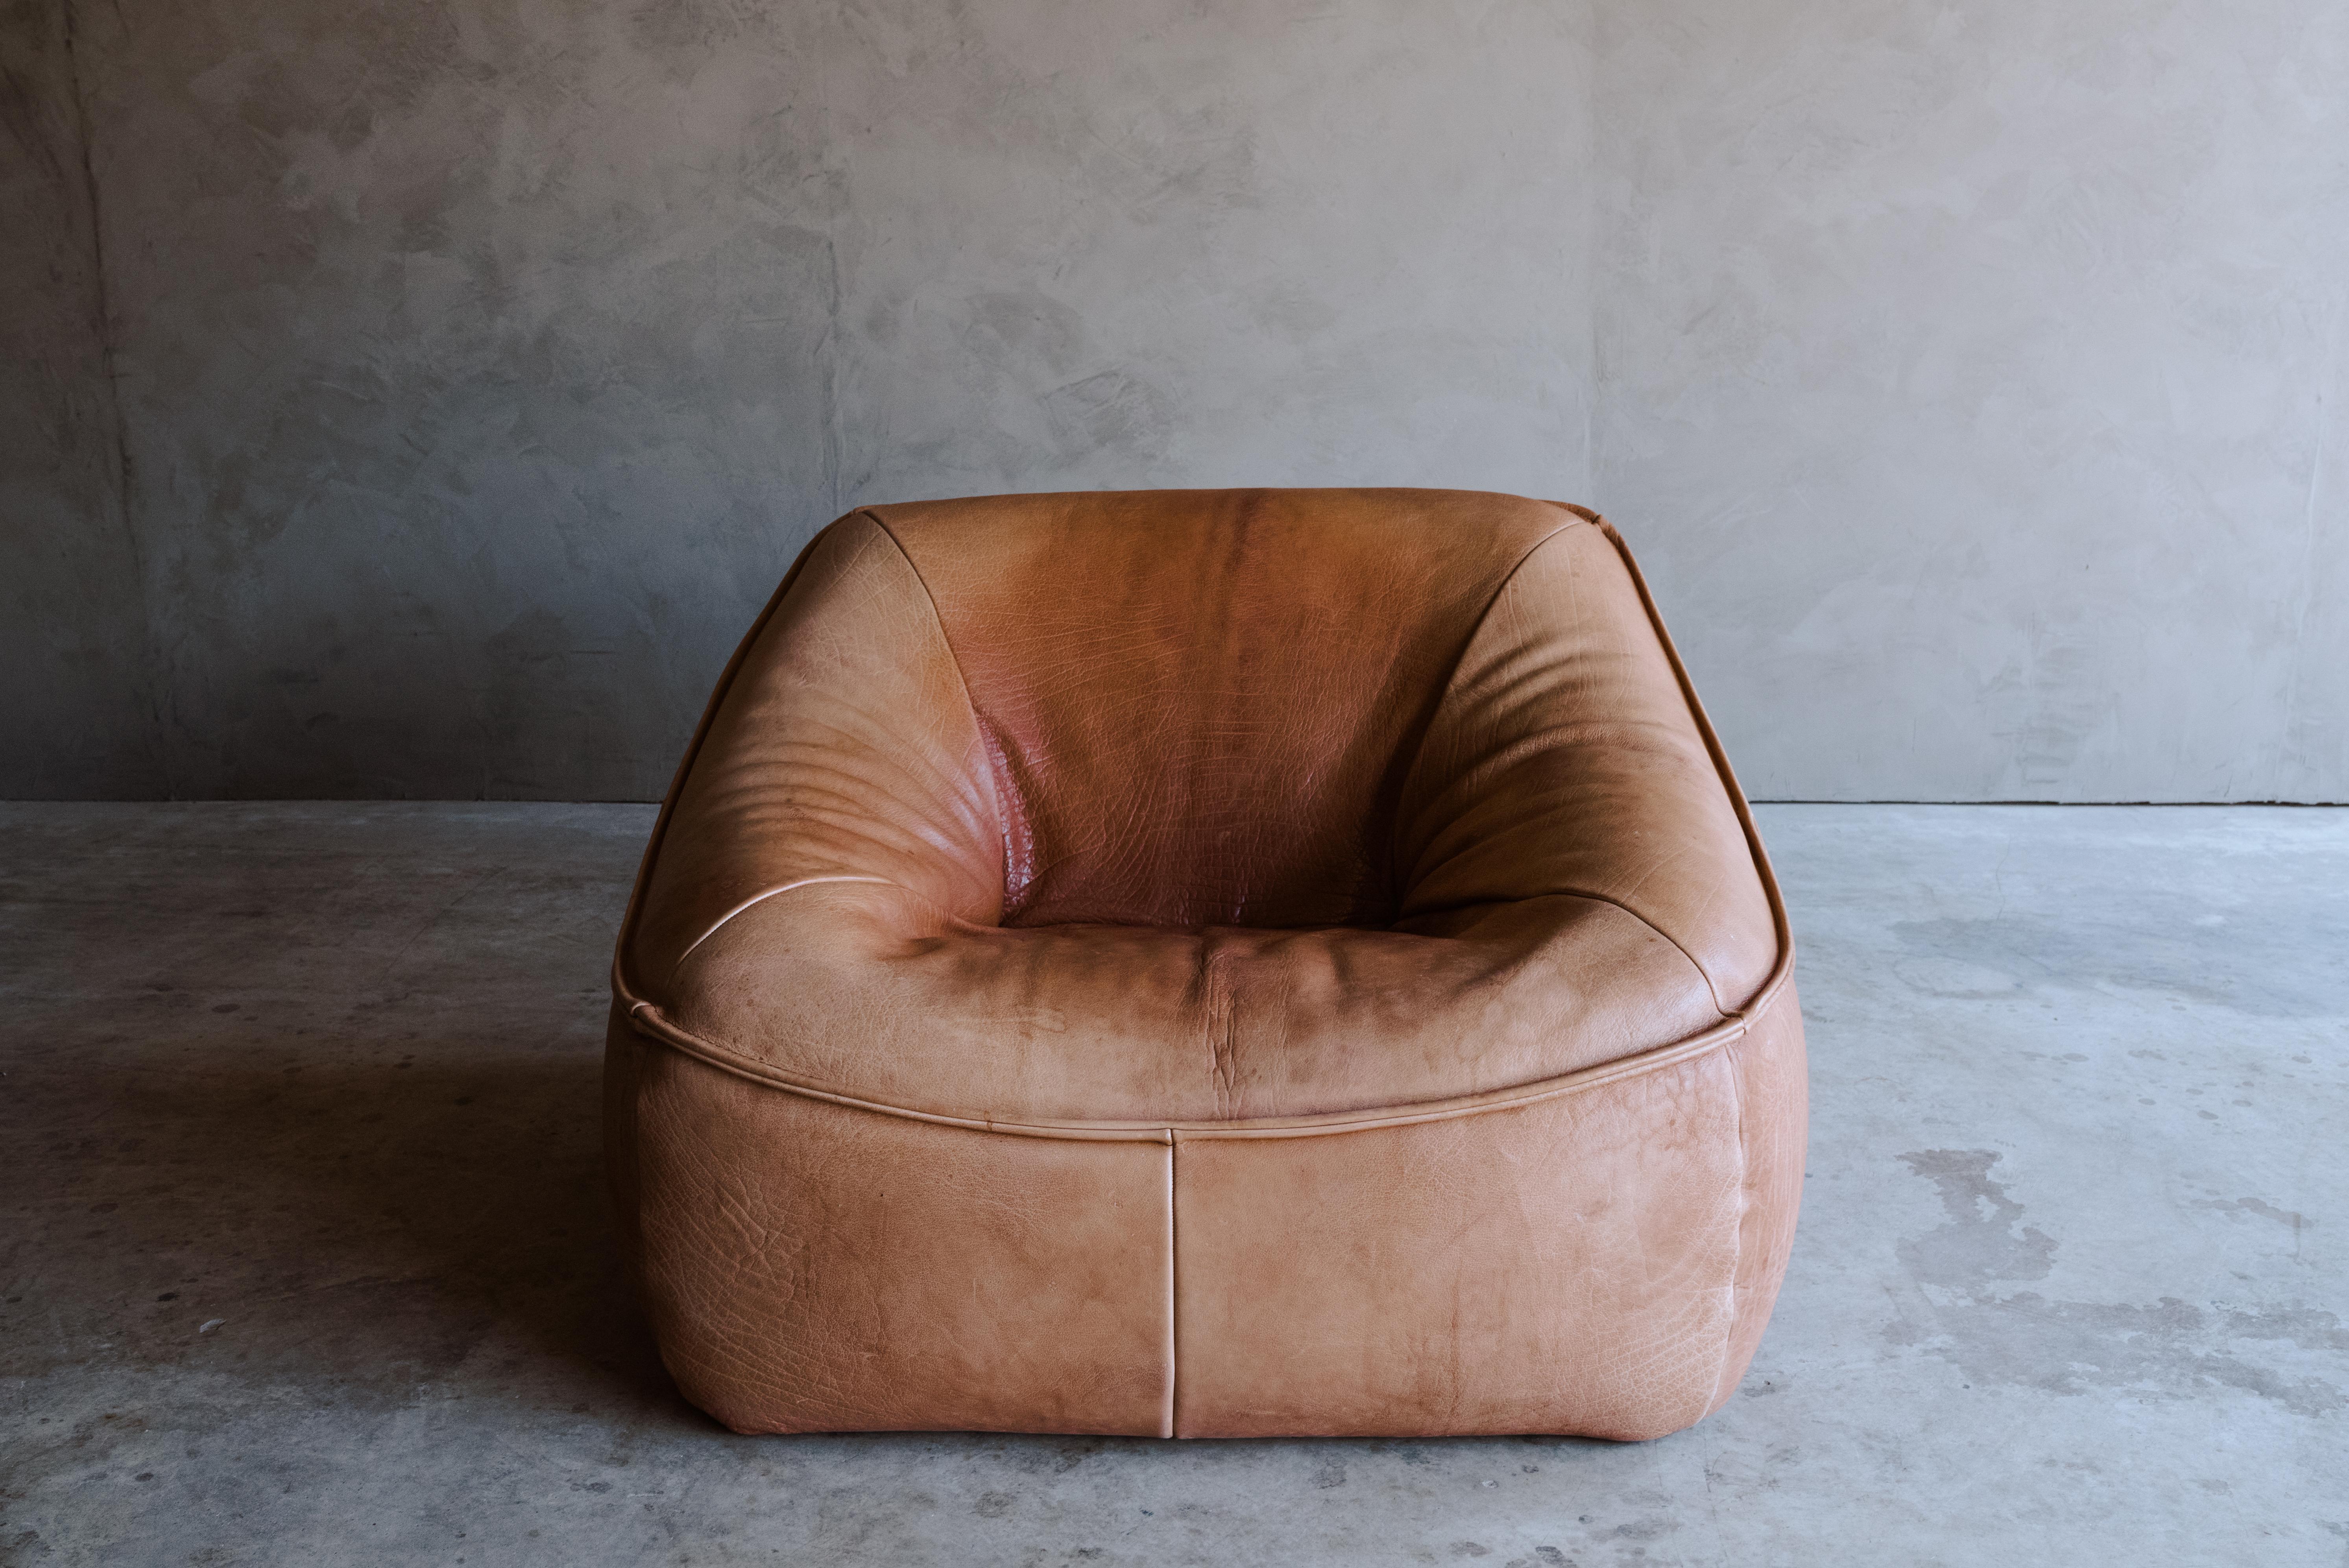 Vintage Gerard Van Den Berg lounge chair, Model Ringo, circa 1970. Original light tan leather upholstery with nice patina and wear. Very comfortable.